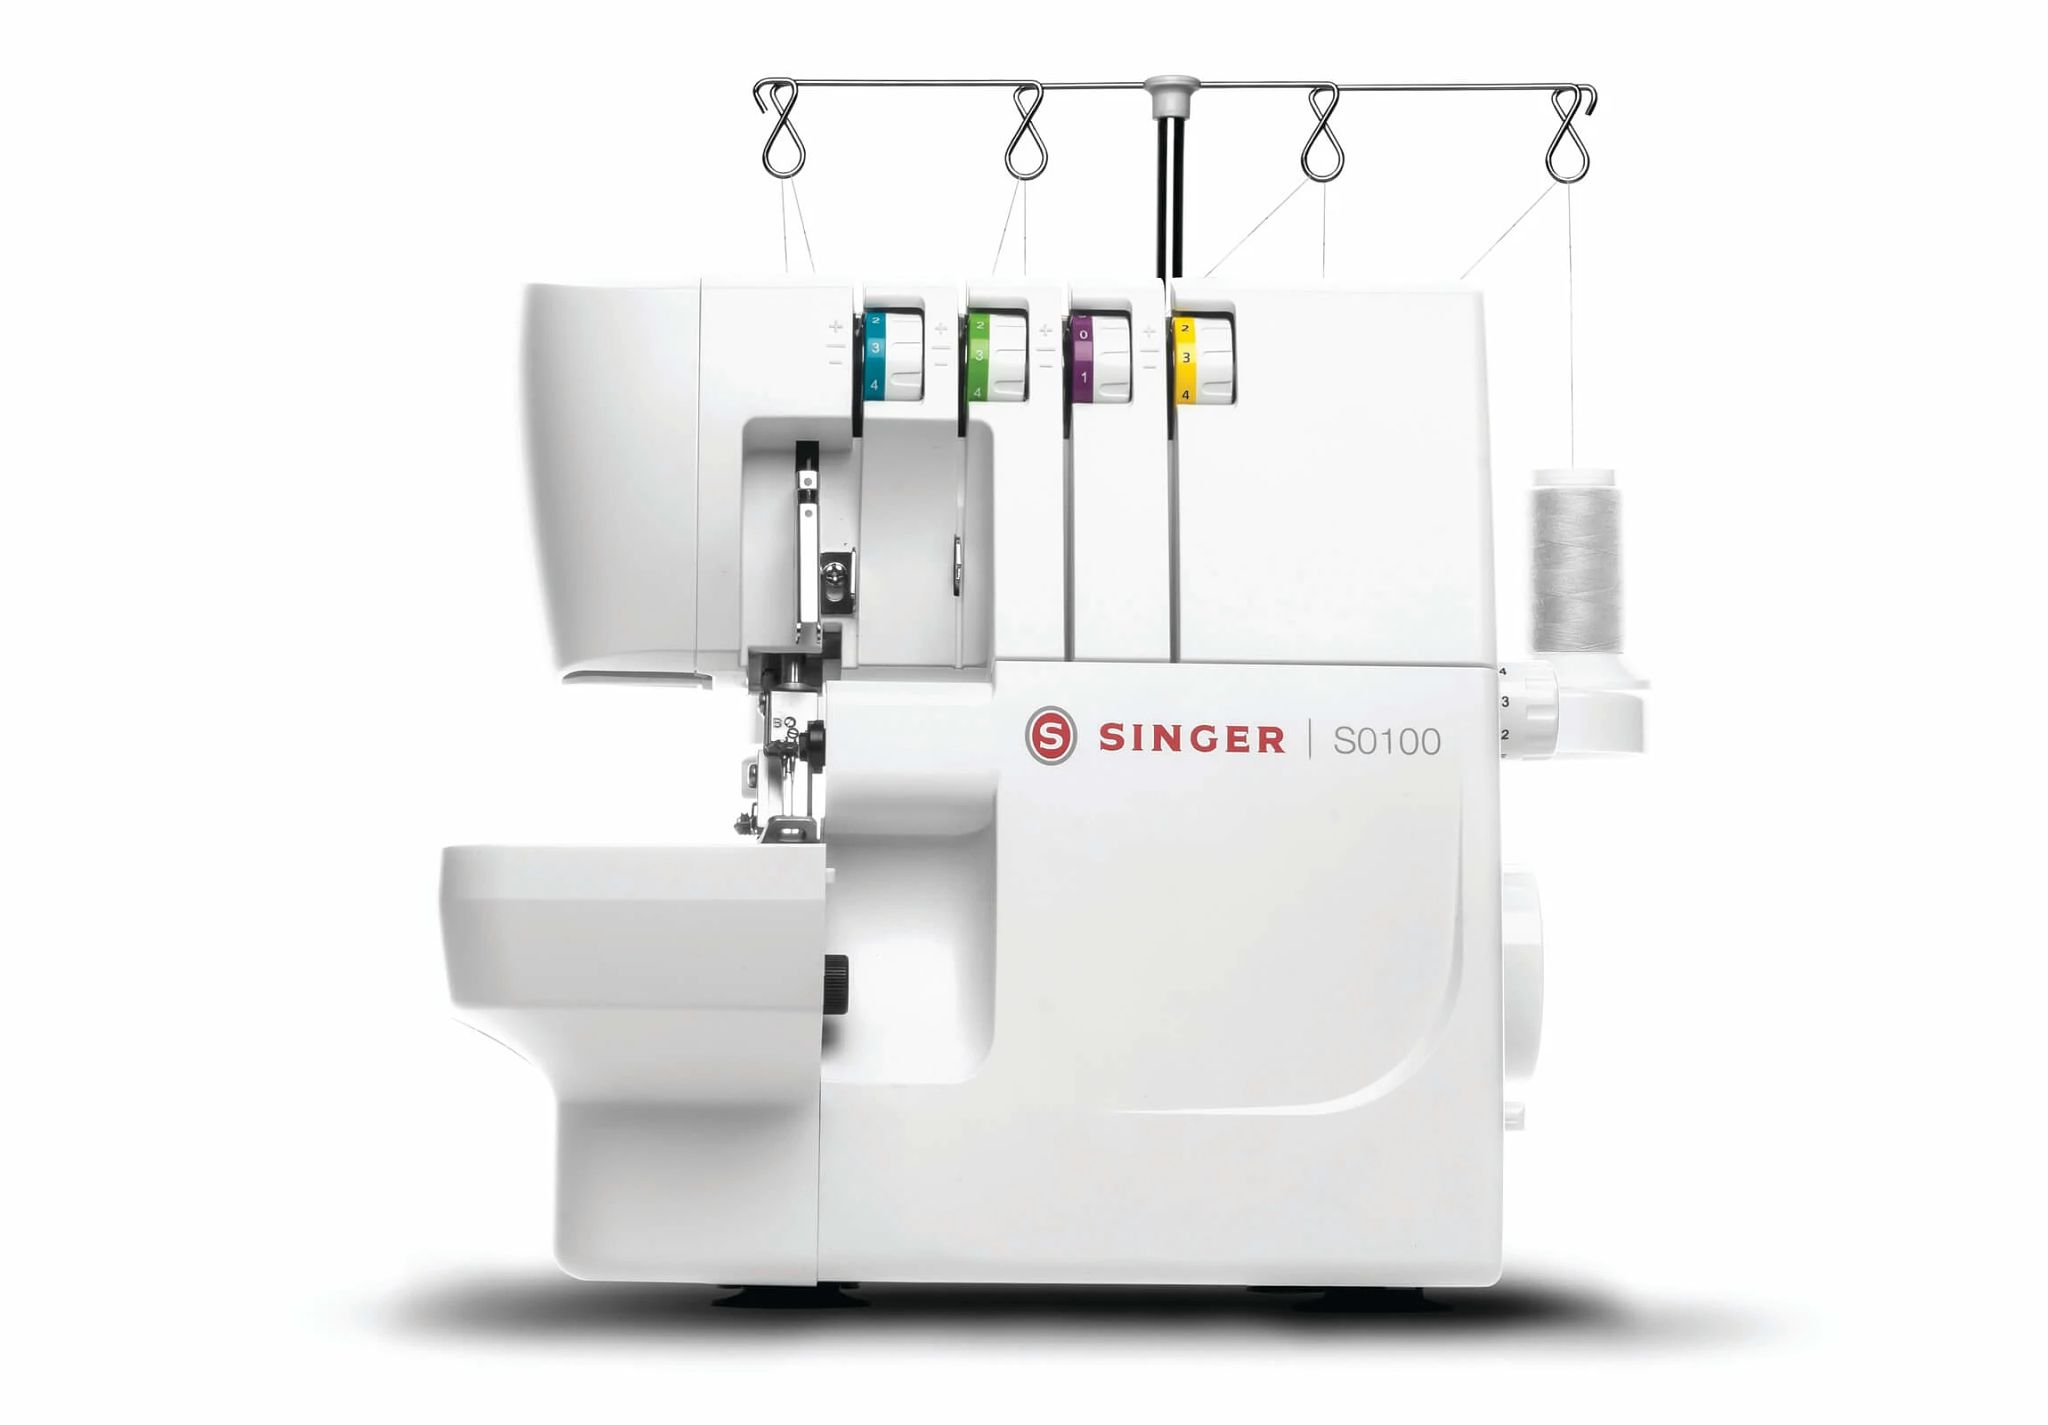 6 Pcs Sewing Machine Cleaning Kit, Overlock & Serger Service/Repair Tool Kit - S